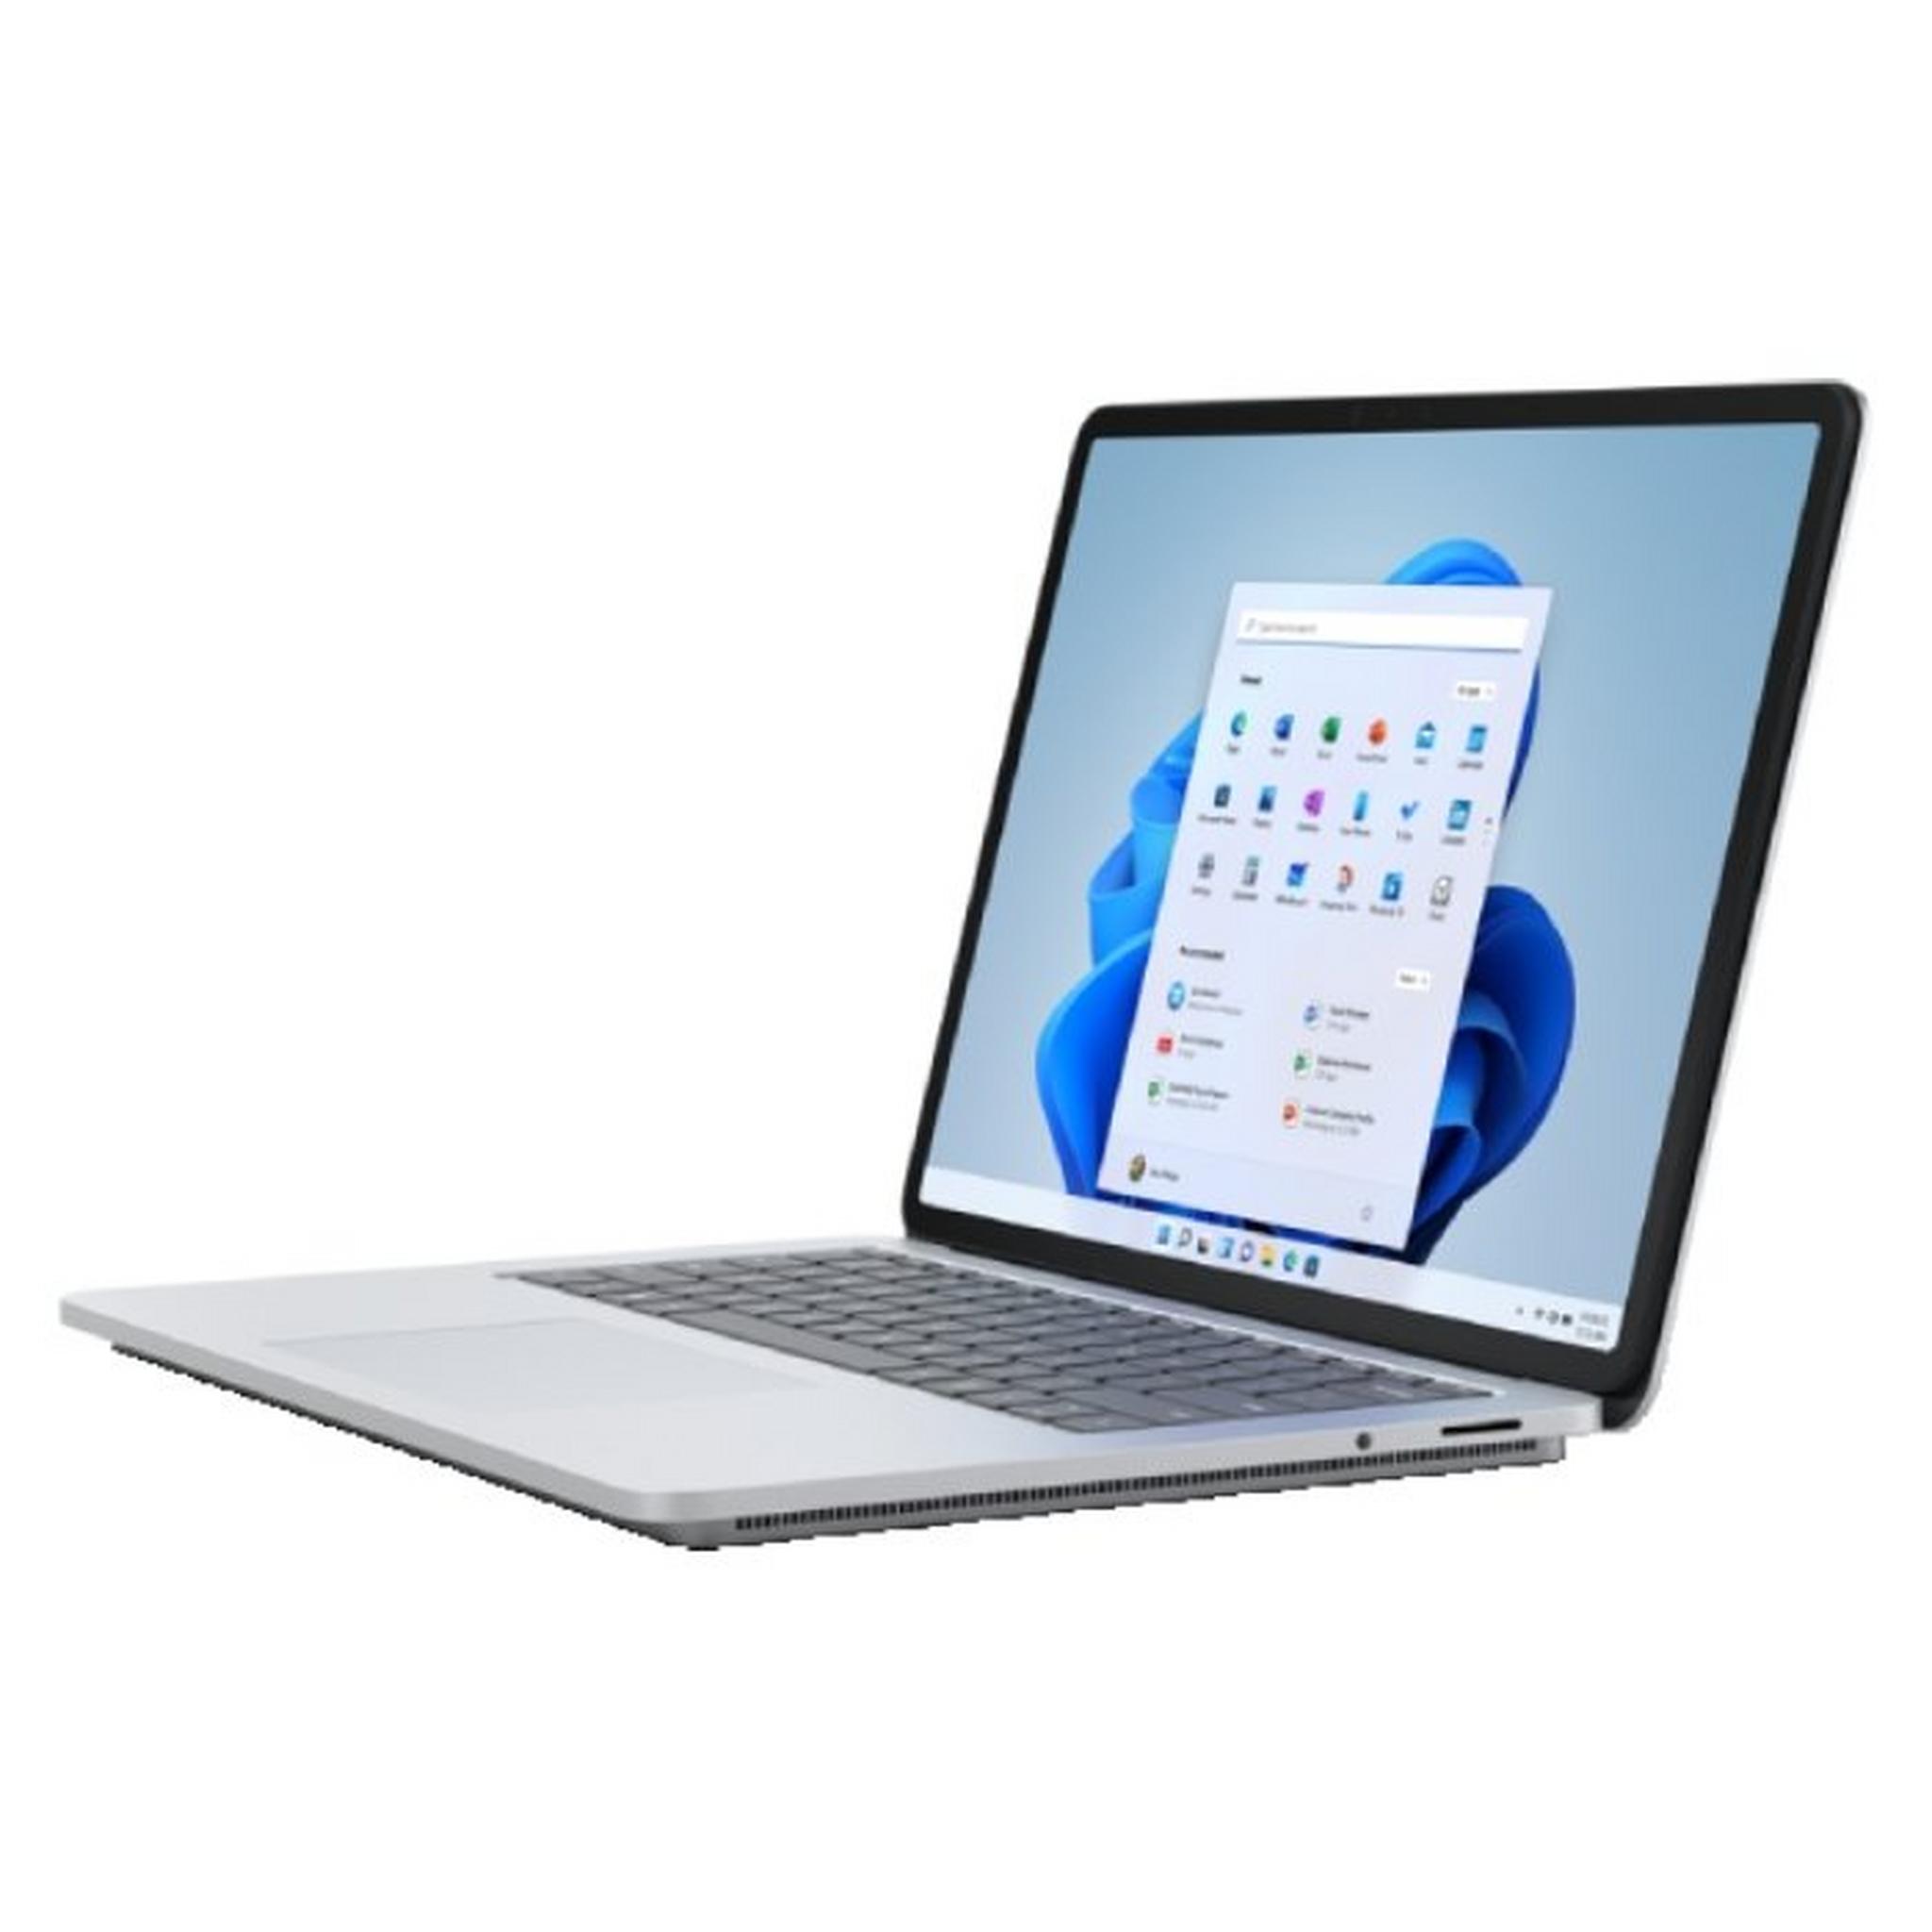 Microsoft Surface Studio Intel Core i5 11th Gen, 16GB RAM, 512GB SSD, 14-inch Convertible Laptop - Platinum